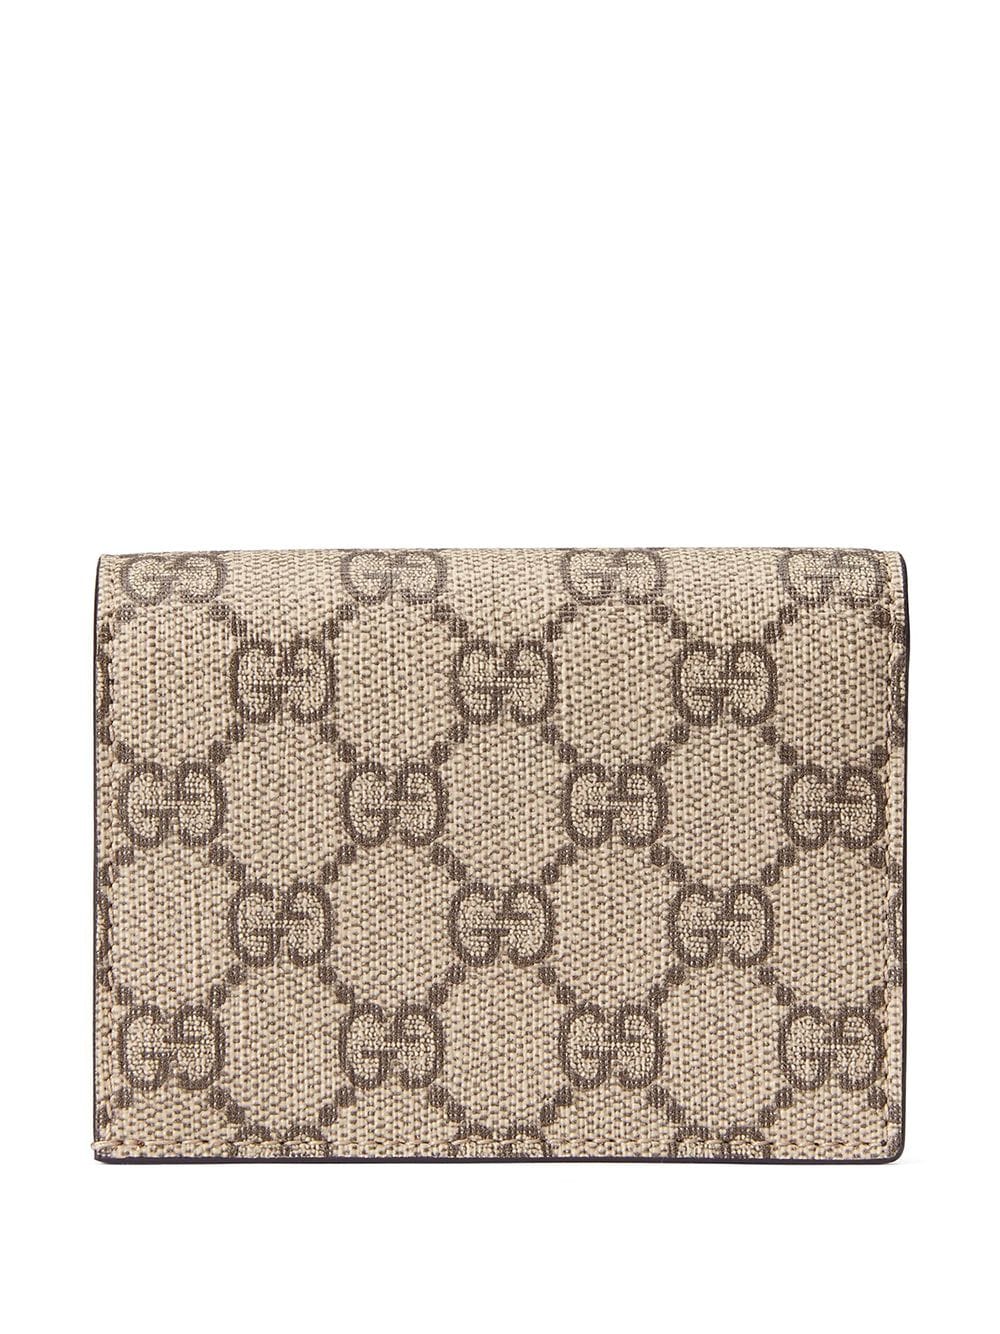 Gucci logo-cut Out Monogram Wallet - Farfetch